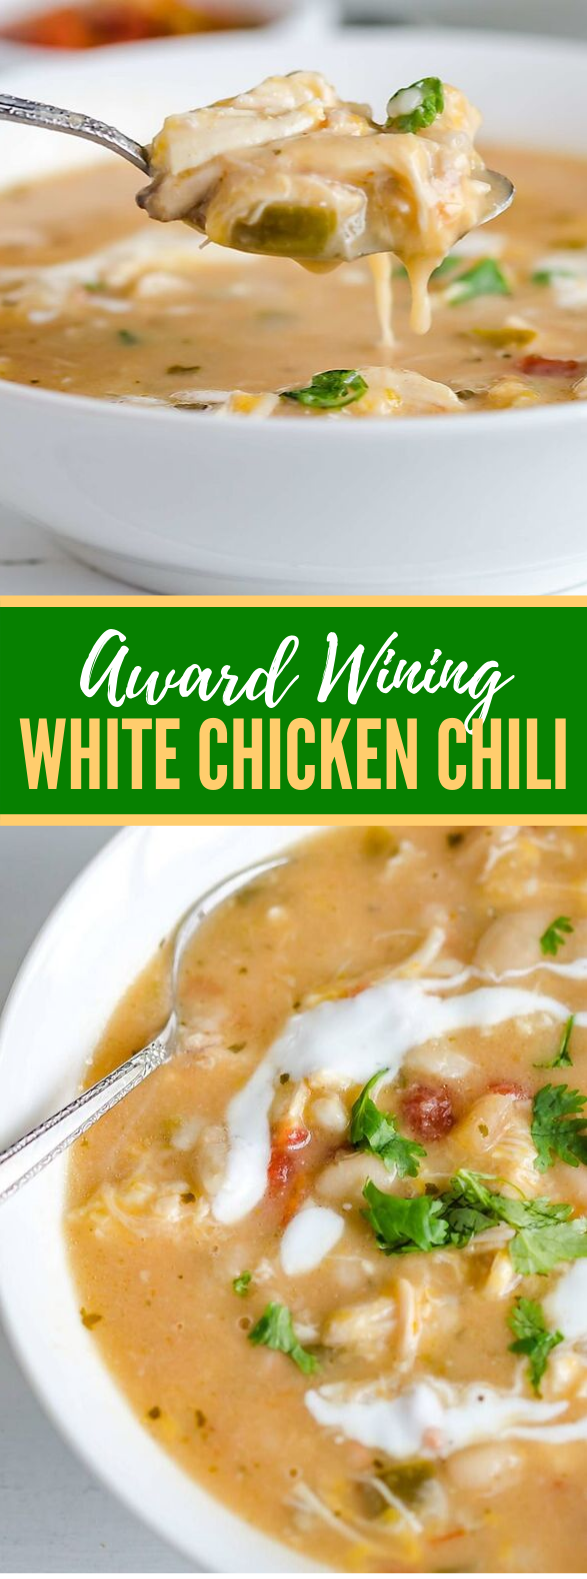 White Chicken Chili #dinner #mexicanfood